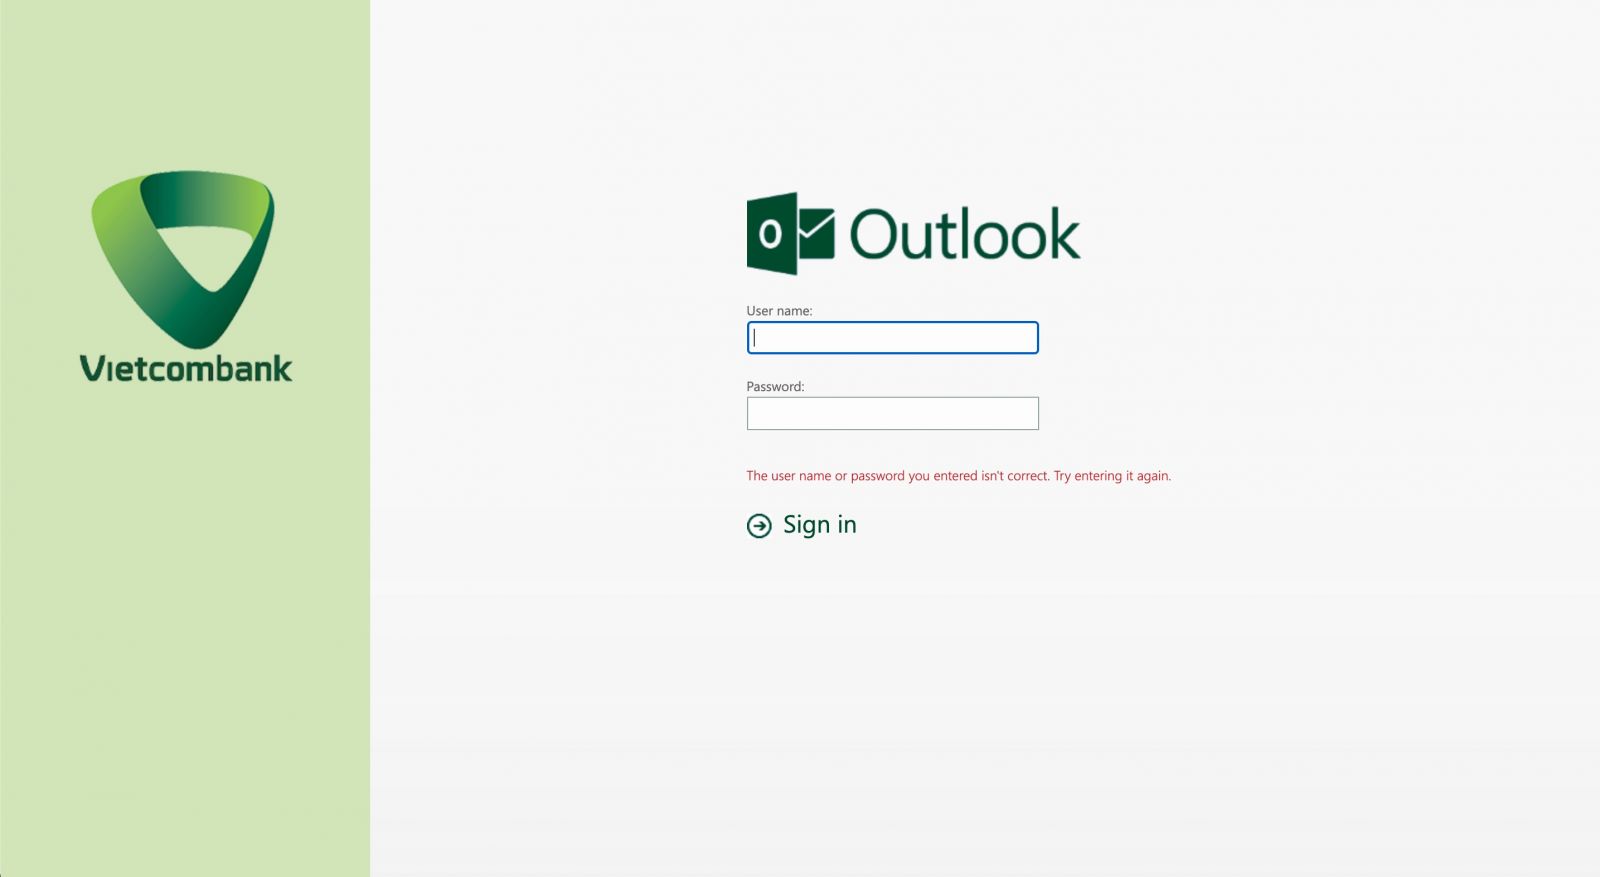 Gửi e-mail qua Outlook tới vietcombank